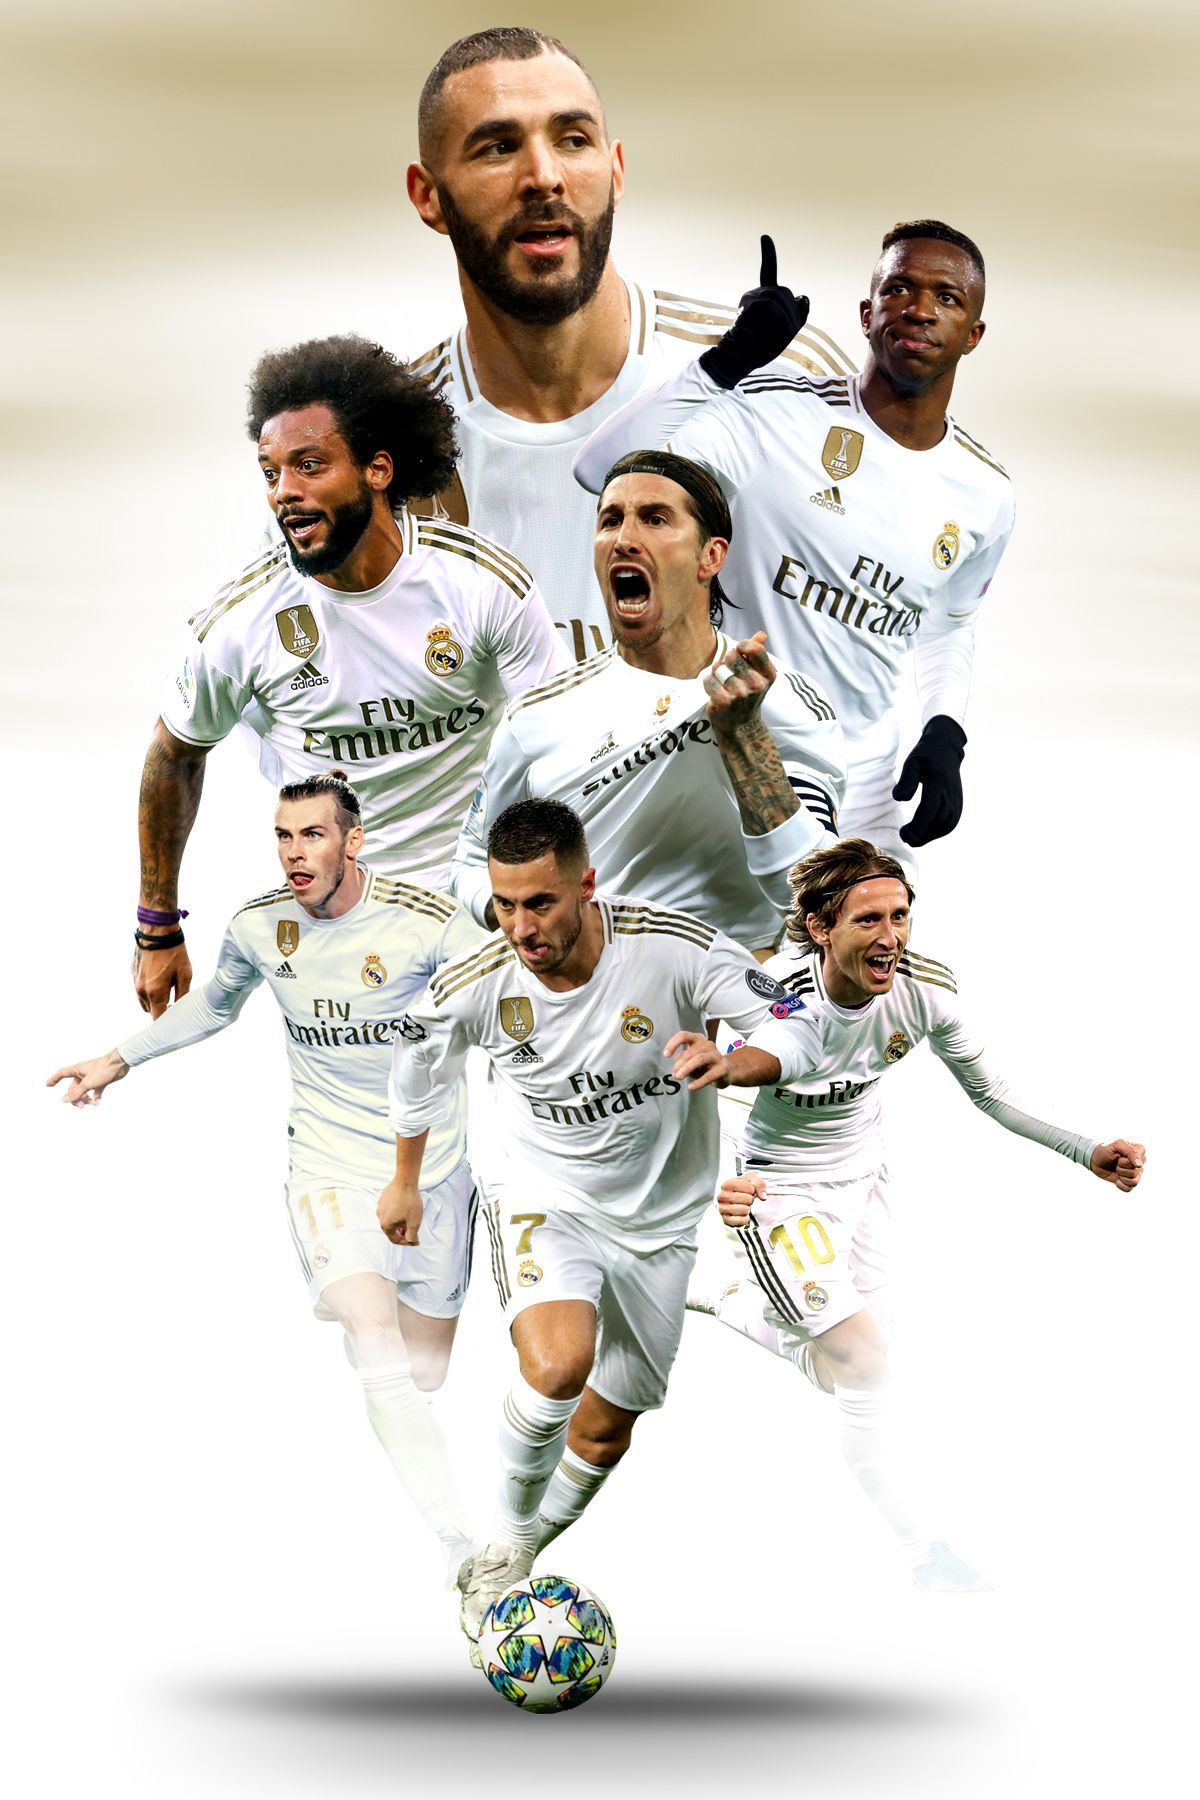 Real Madrid Poster. Real madrid wallpaper, Real madrid team, Madrid wallpaper